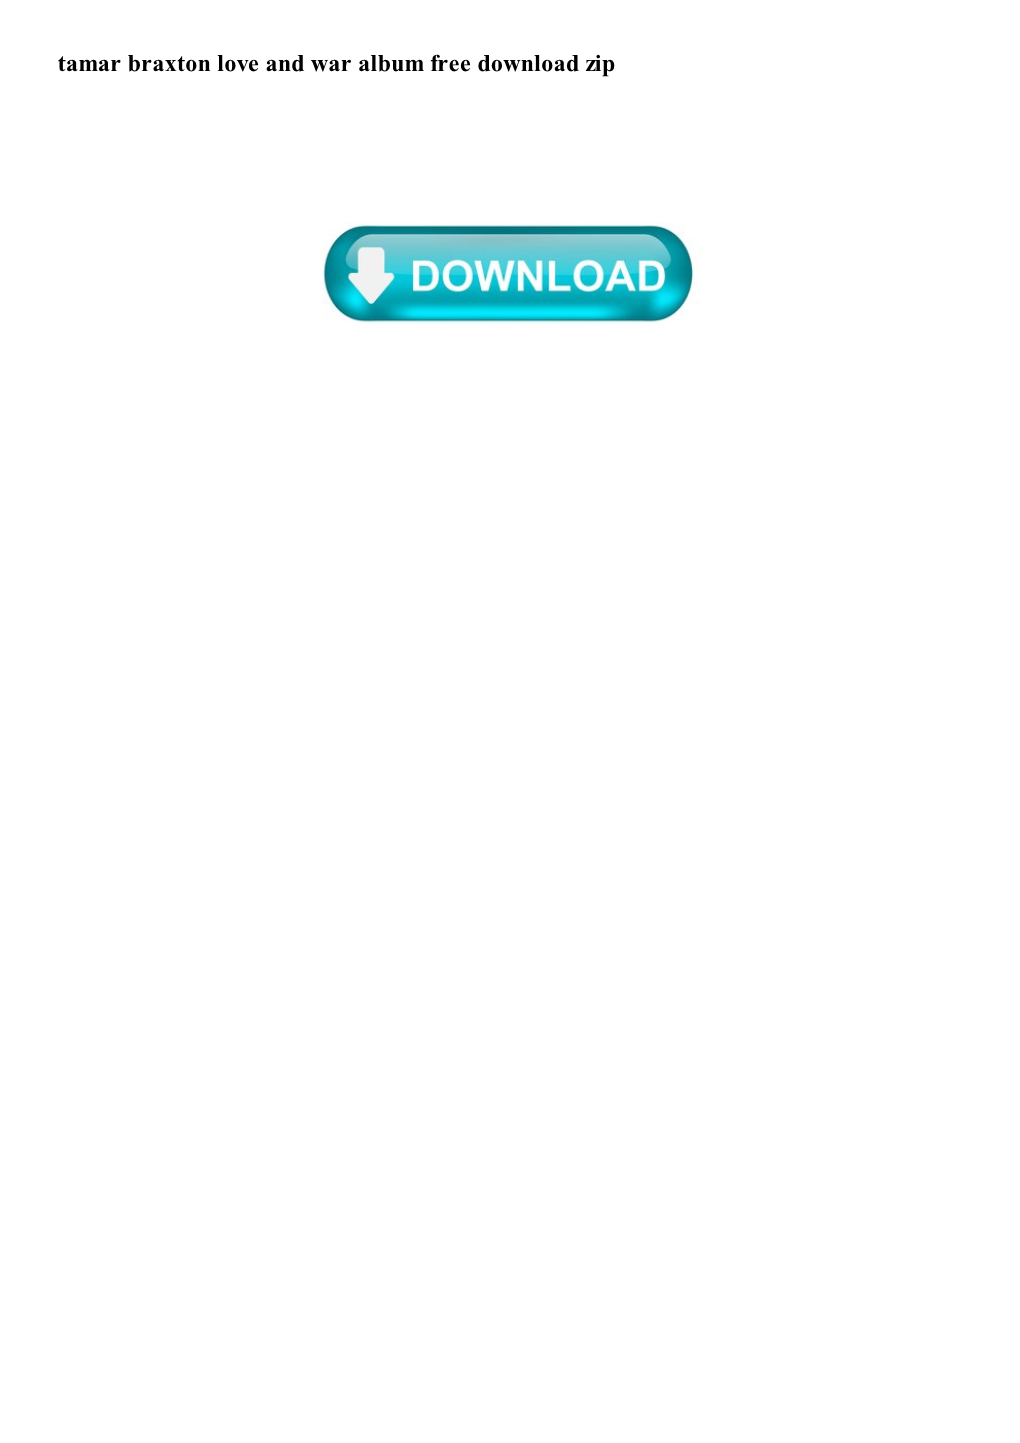 Tamar Braxton Love and War Album Free Download Zip Tamar Braxton – Calling All Lovers Download ZIP 2015